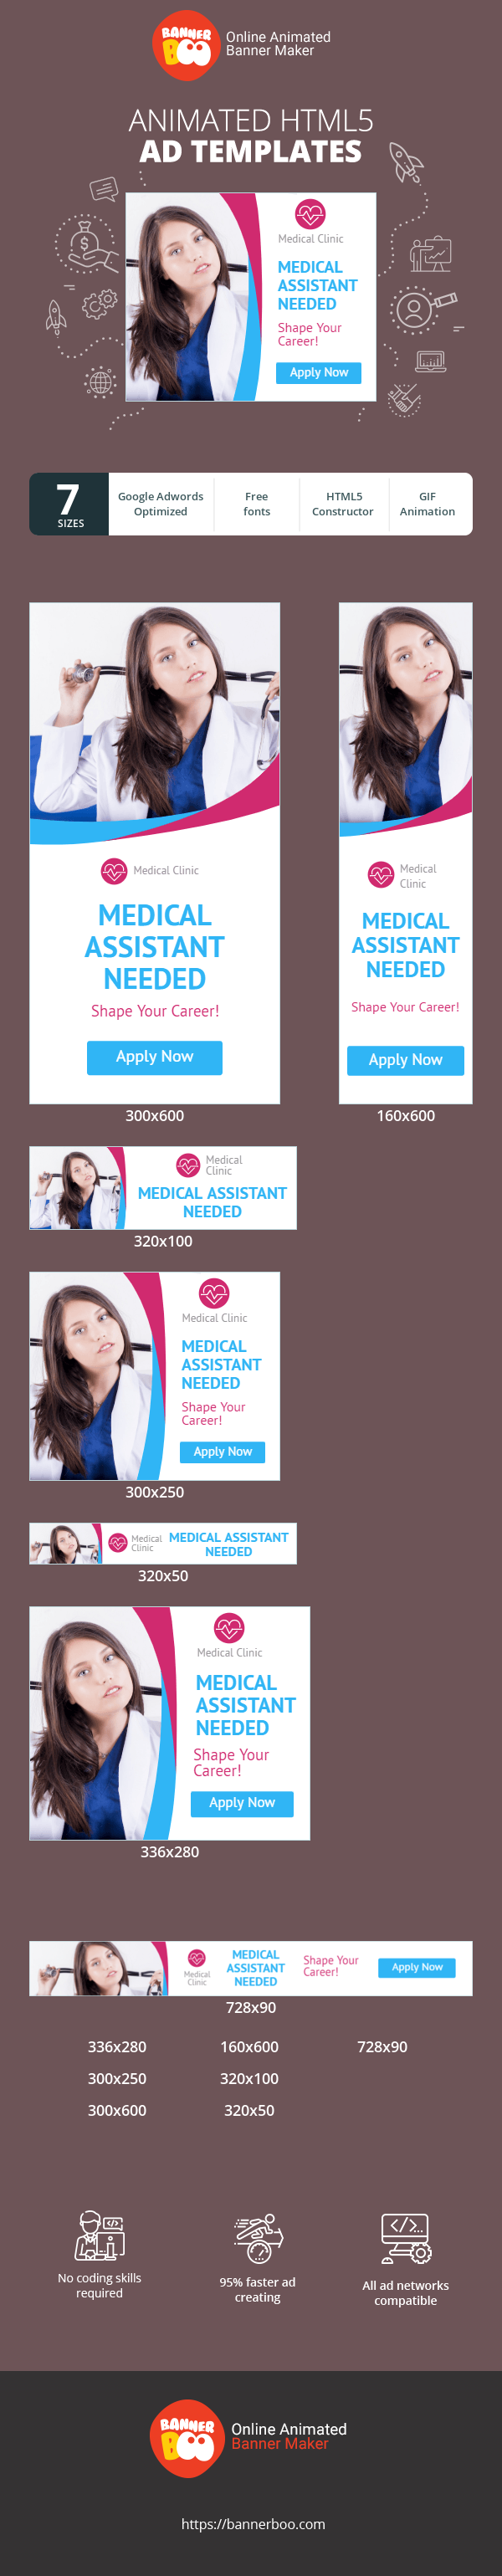 Szablon reklamy banerowej — Medical Assistant Needed